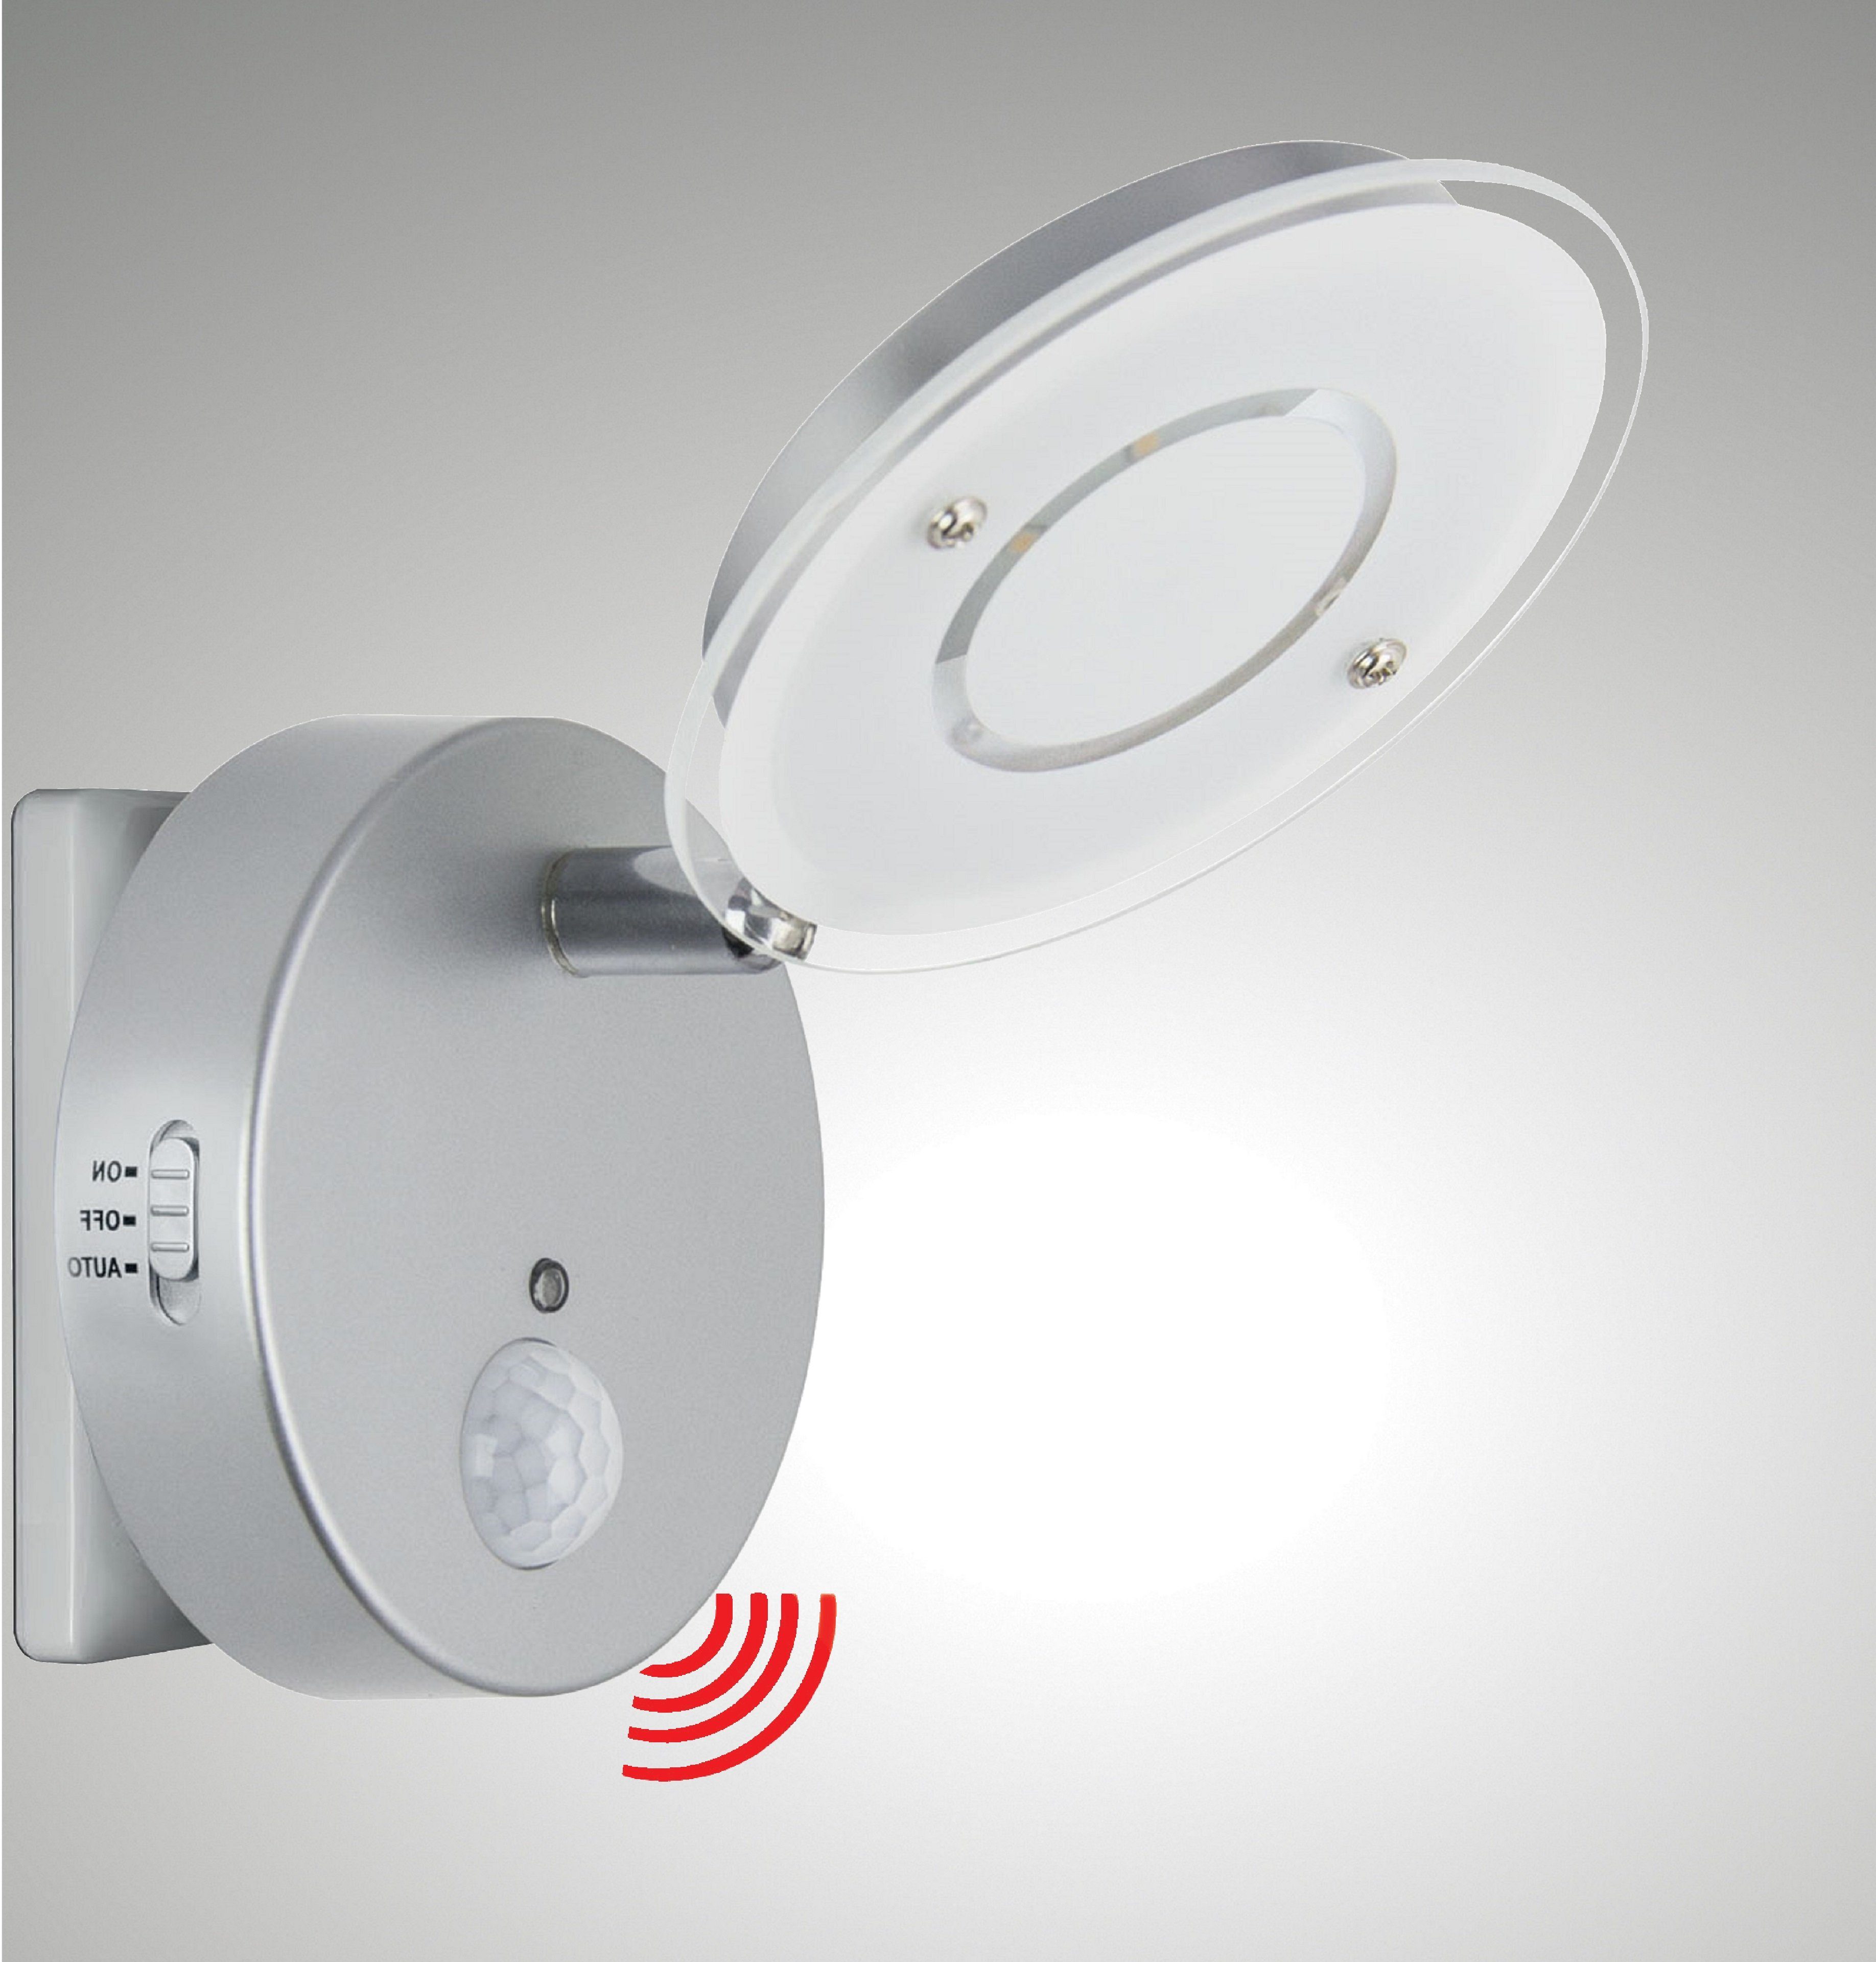 LED Stecker Silber Orientierungsleuchte Bewegungsmelder Automatik TG2635-14 